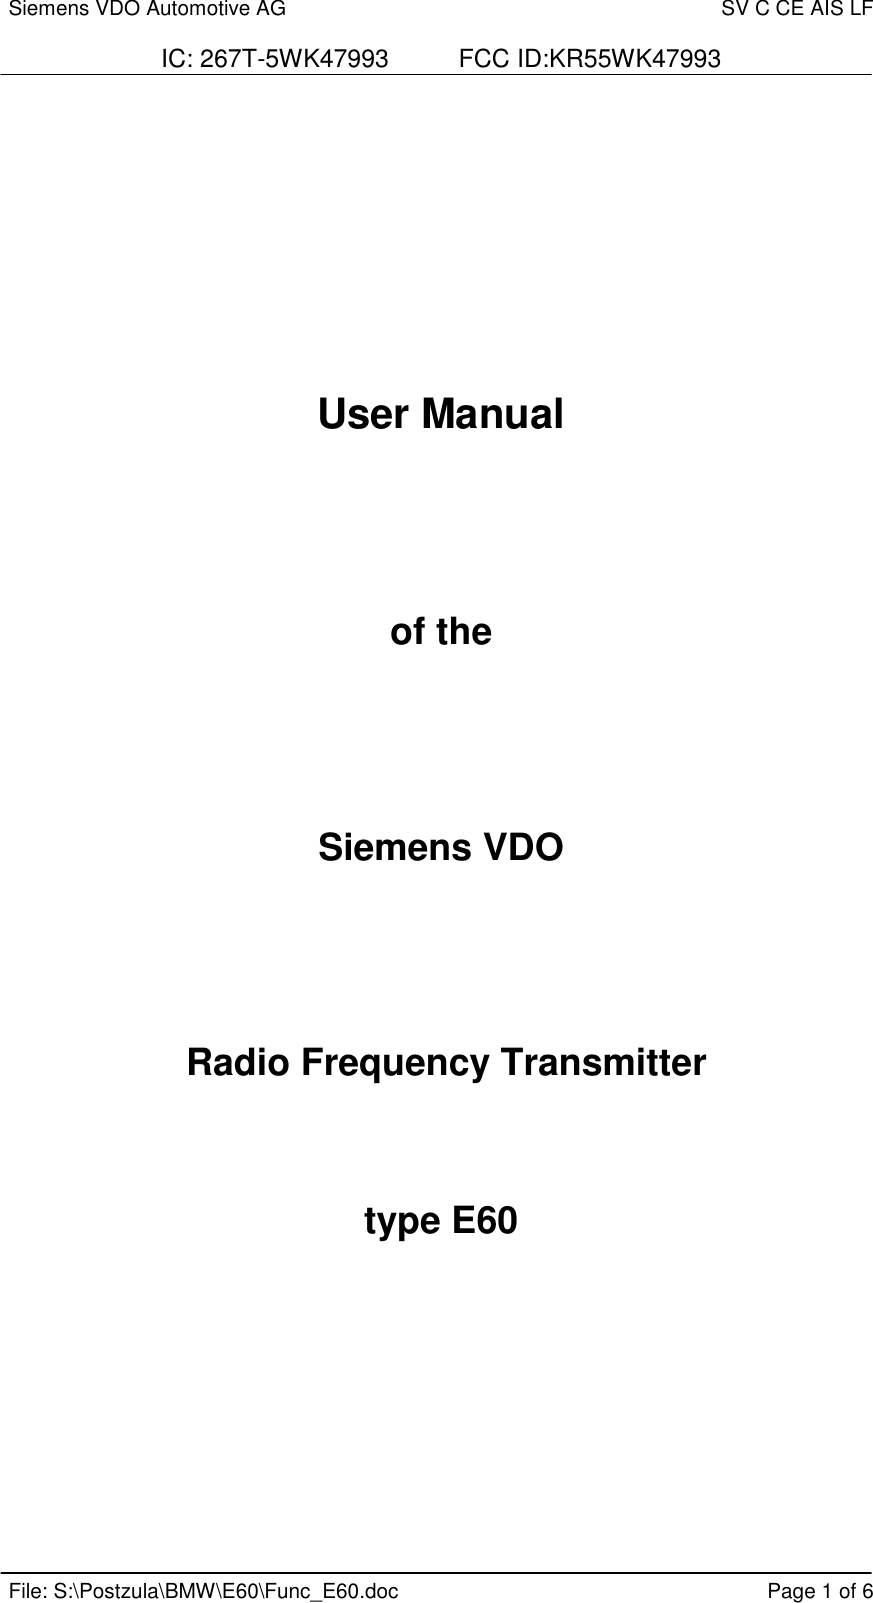 Siemens VDO Automotive AG SV C CE AIS LFIC: 267T-5WK47993          FCC ID:KR55WK47993File: S:\Postzula\BMW\E60\Func_E60.doc Page 1 of 6User Manualof theSiemens VDO Radio Frequency Transmittertype E60